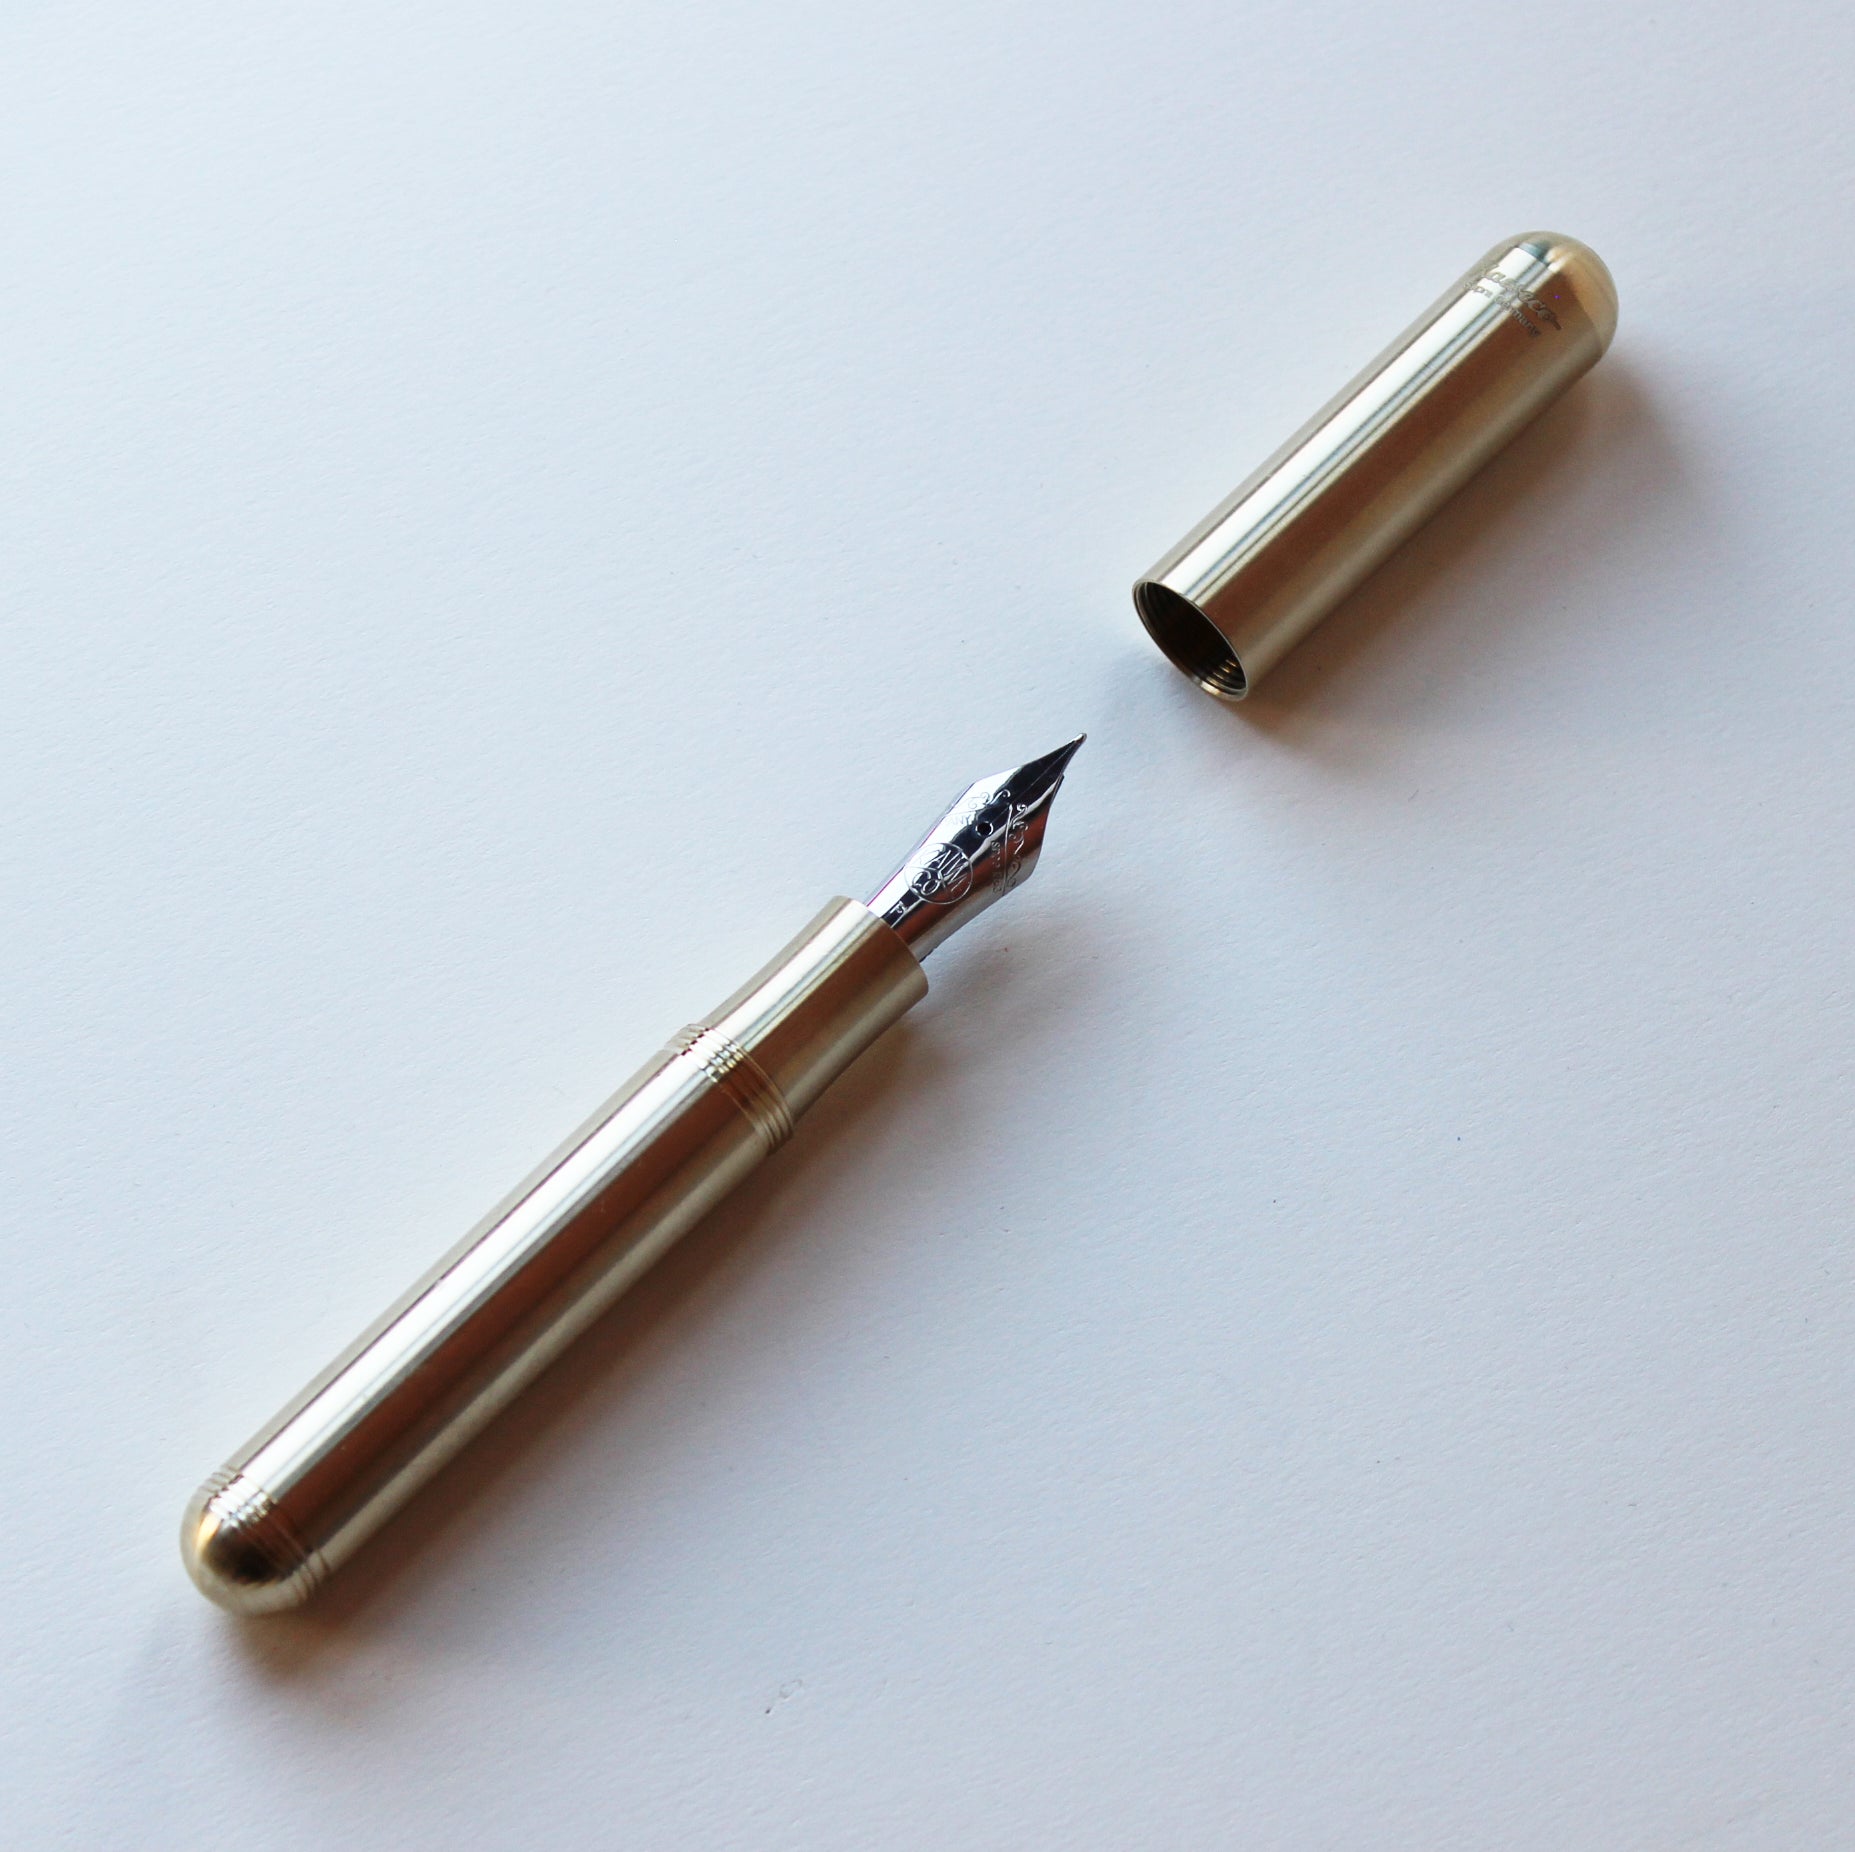 Kaweco Brass Supra Fountain Pen with cap off